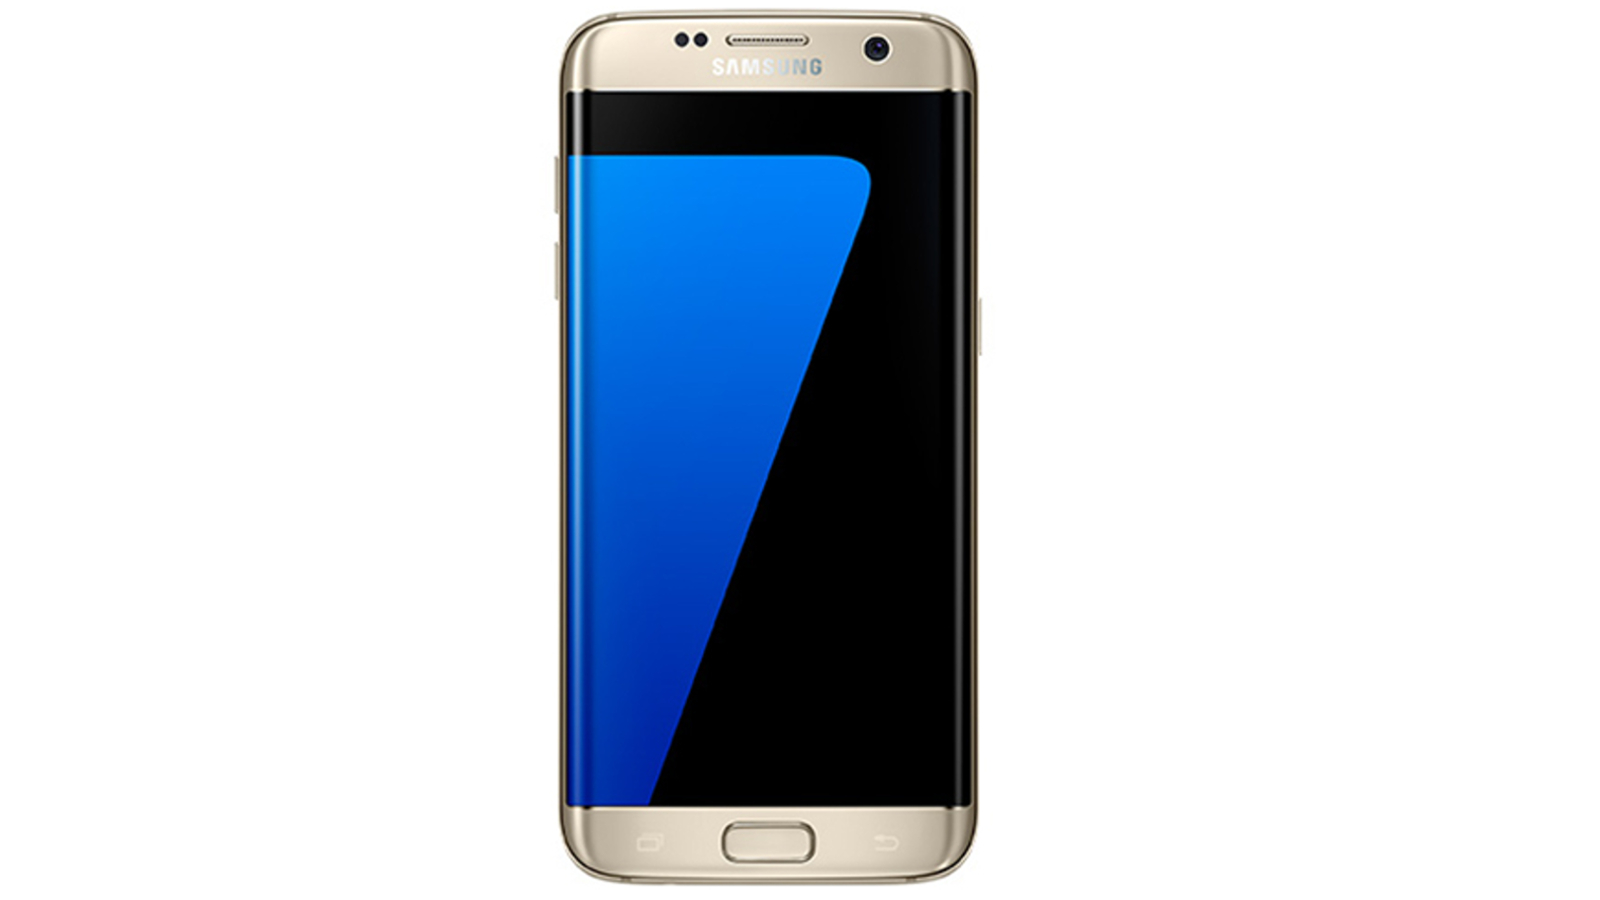 Samsung Galaxy S7 Edge G935fd